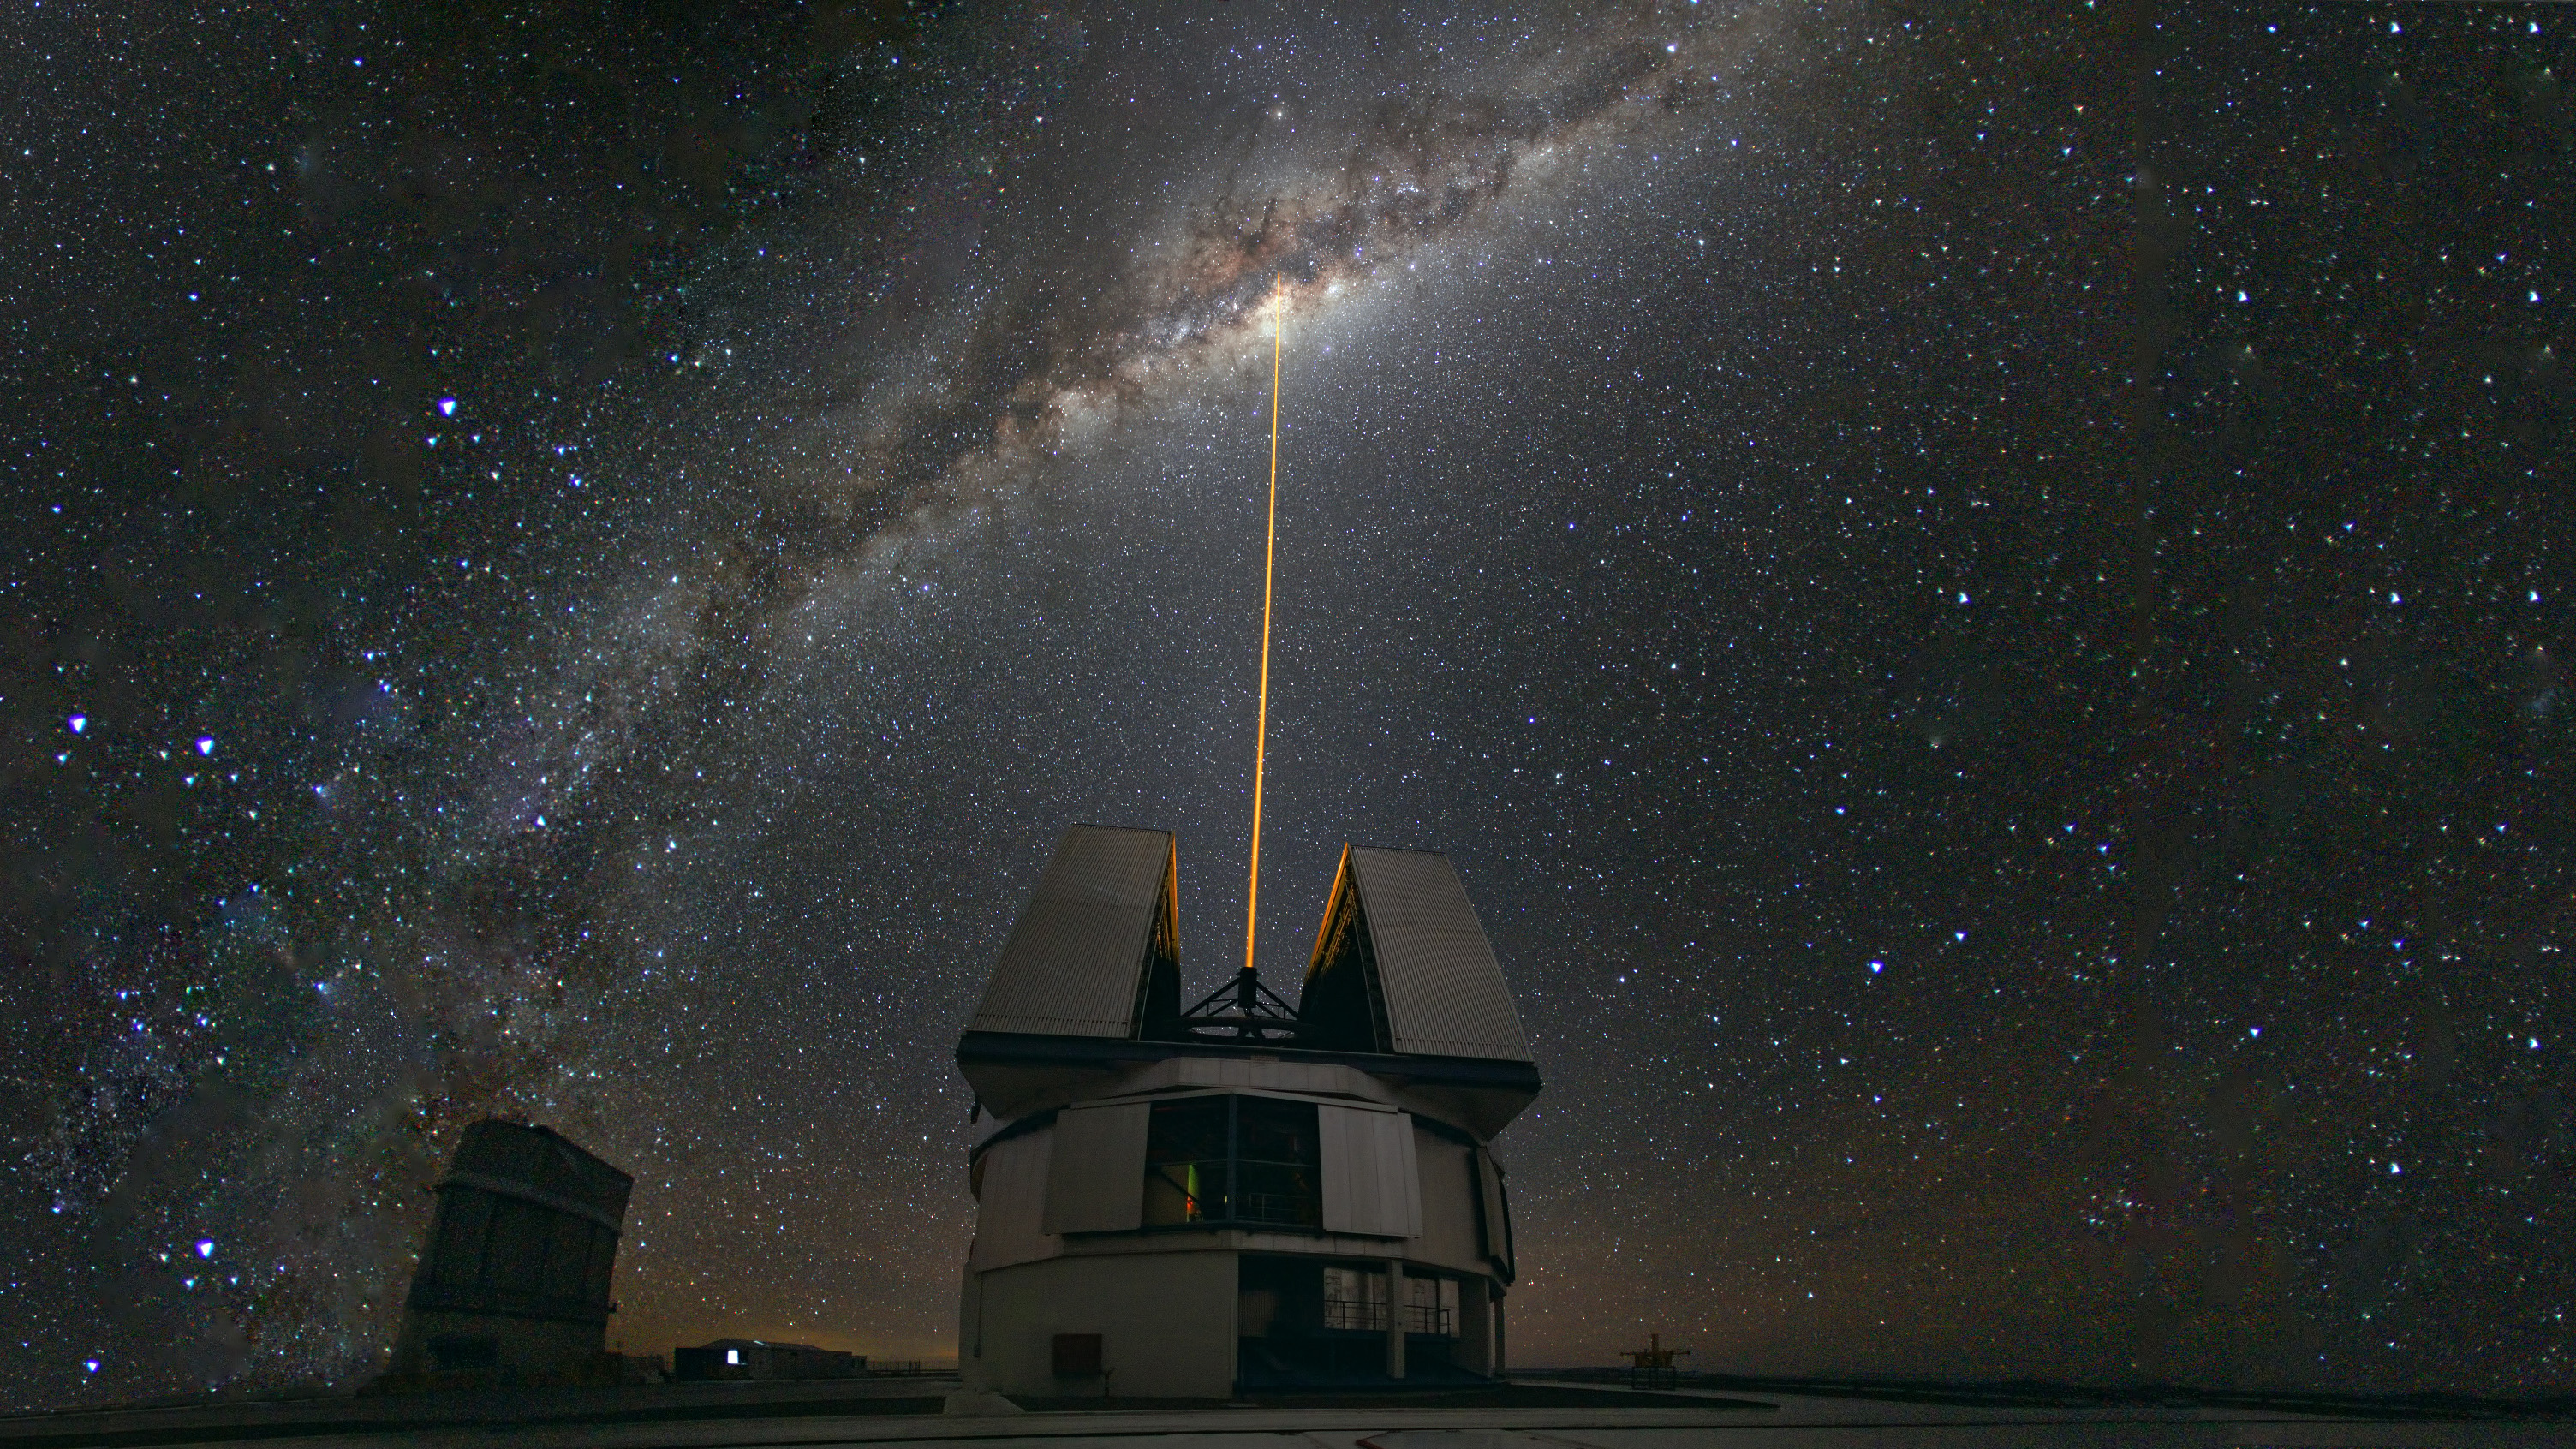 File:Laser Towards Milky Ways Centre Wallpaper.jpg - Wikimedia Commons